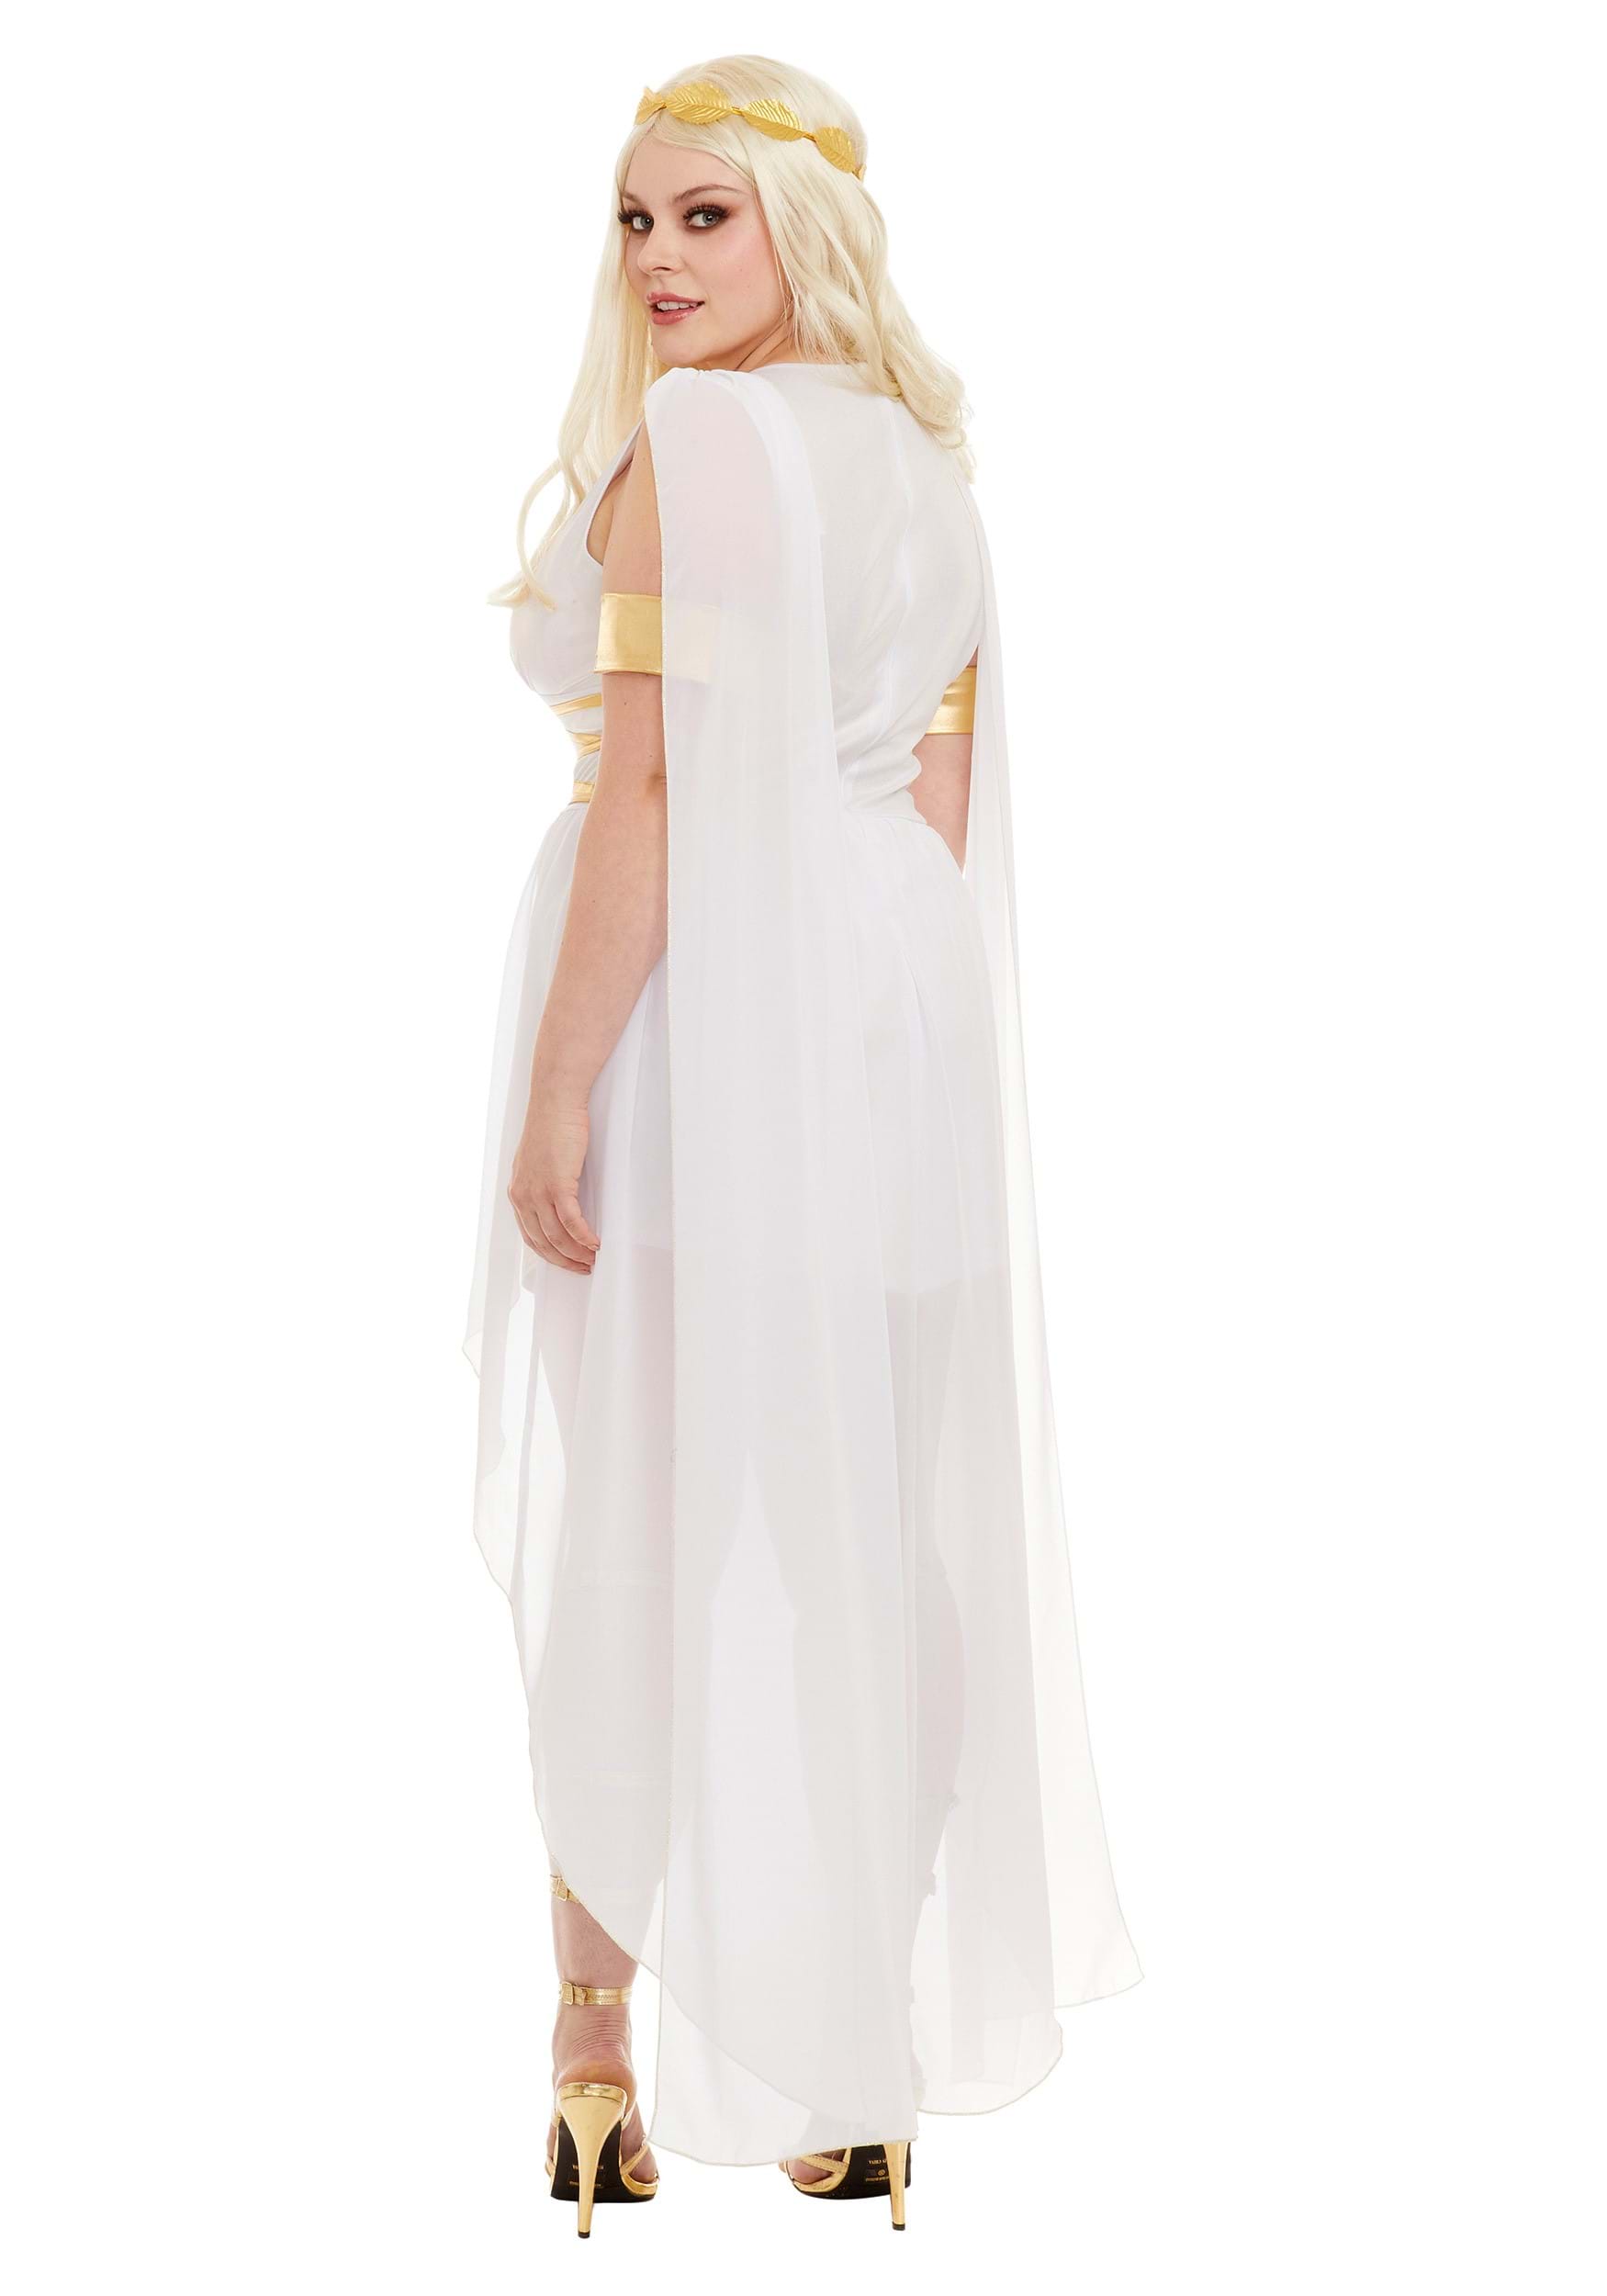 Plus Sized Greek Goddess Costume for Women Back View